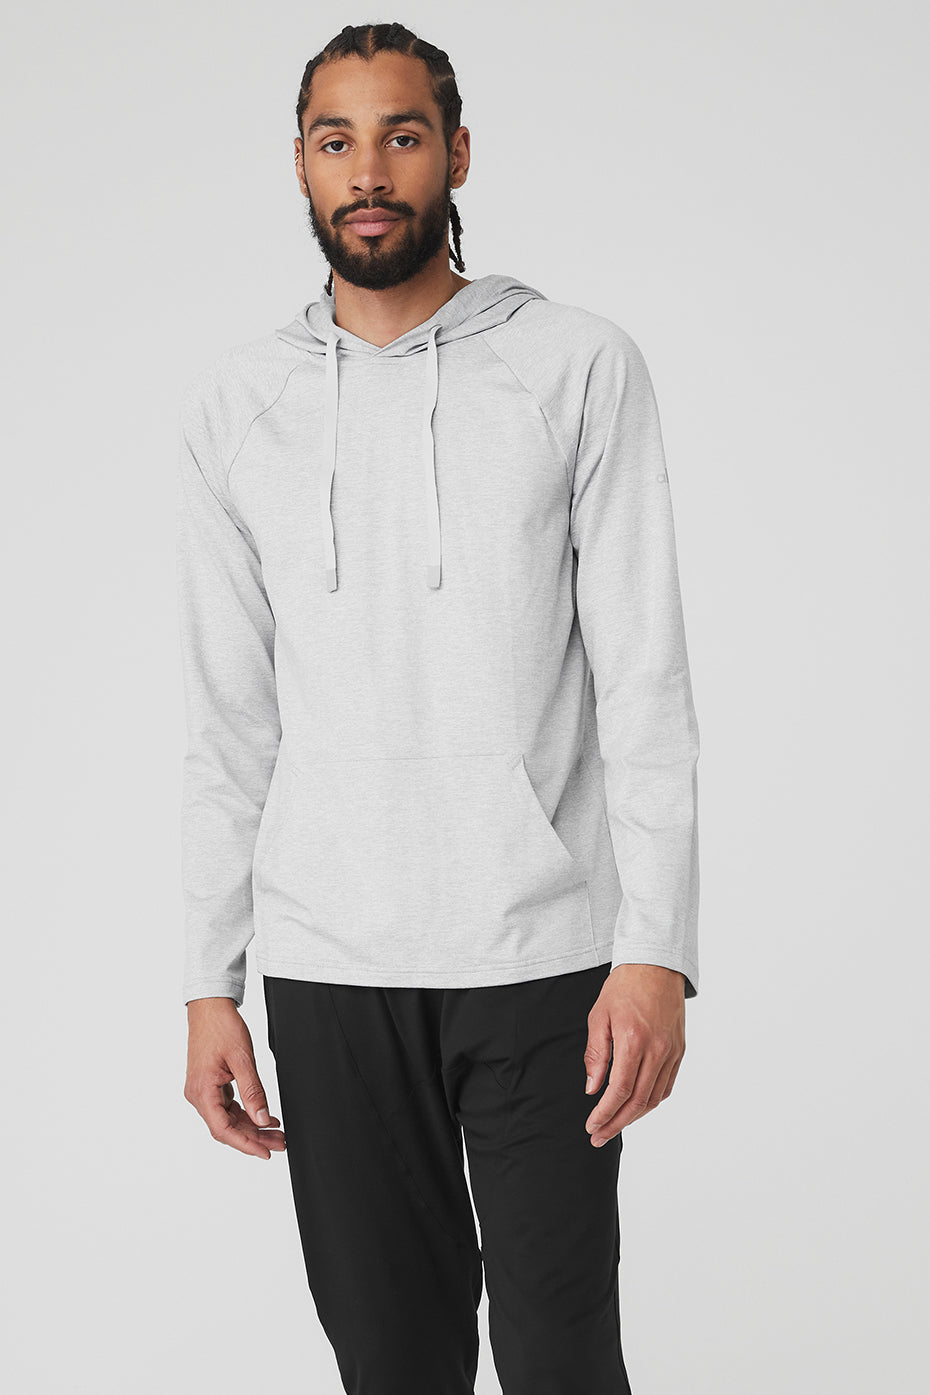 Alo Yoga S Small Grey Slay Slashed Sleeves Slay Hoodie Sweatshirt 